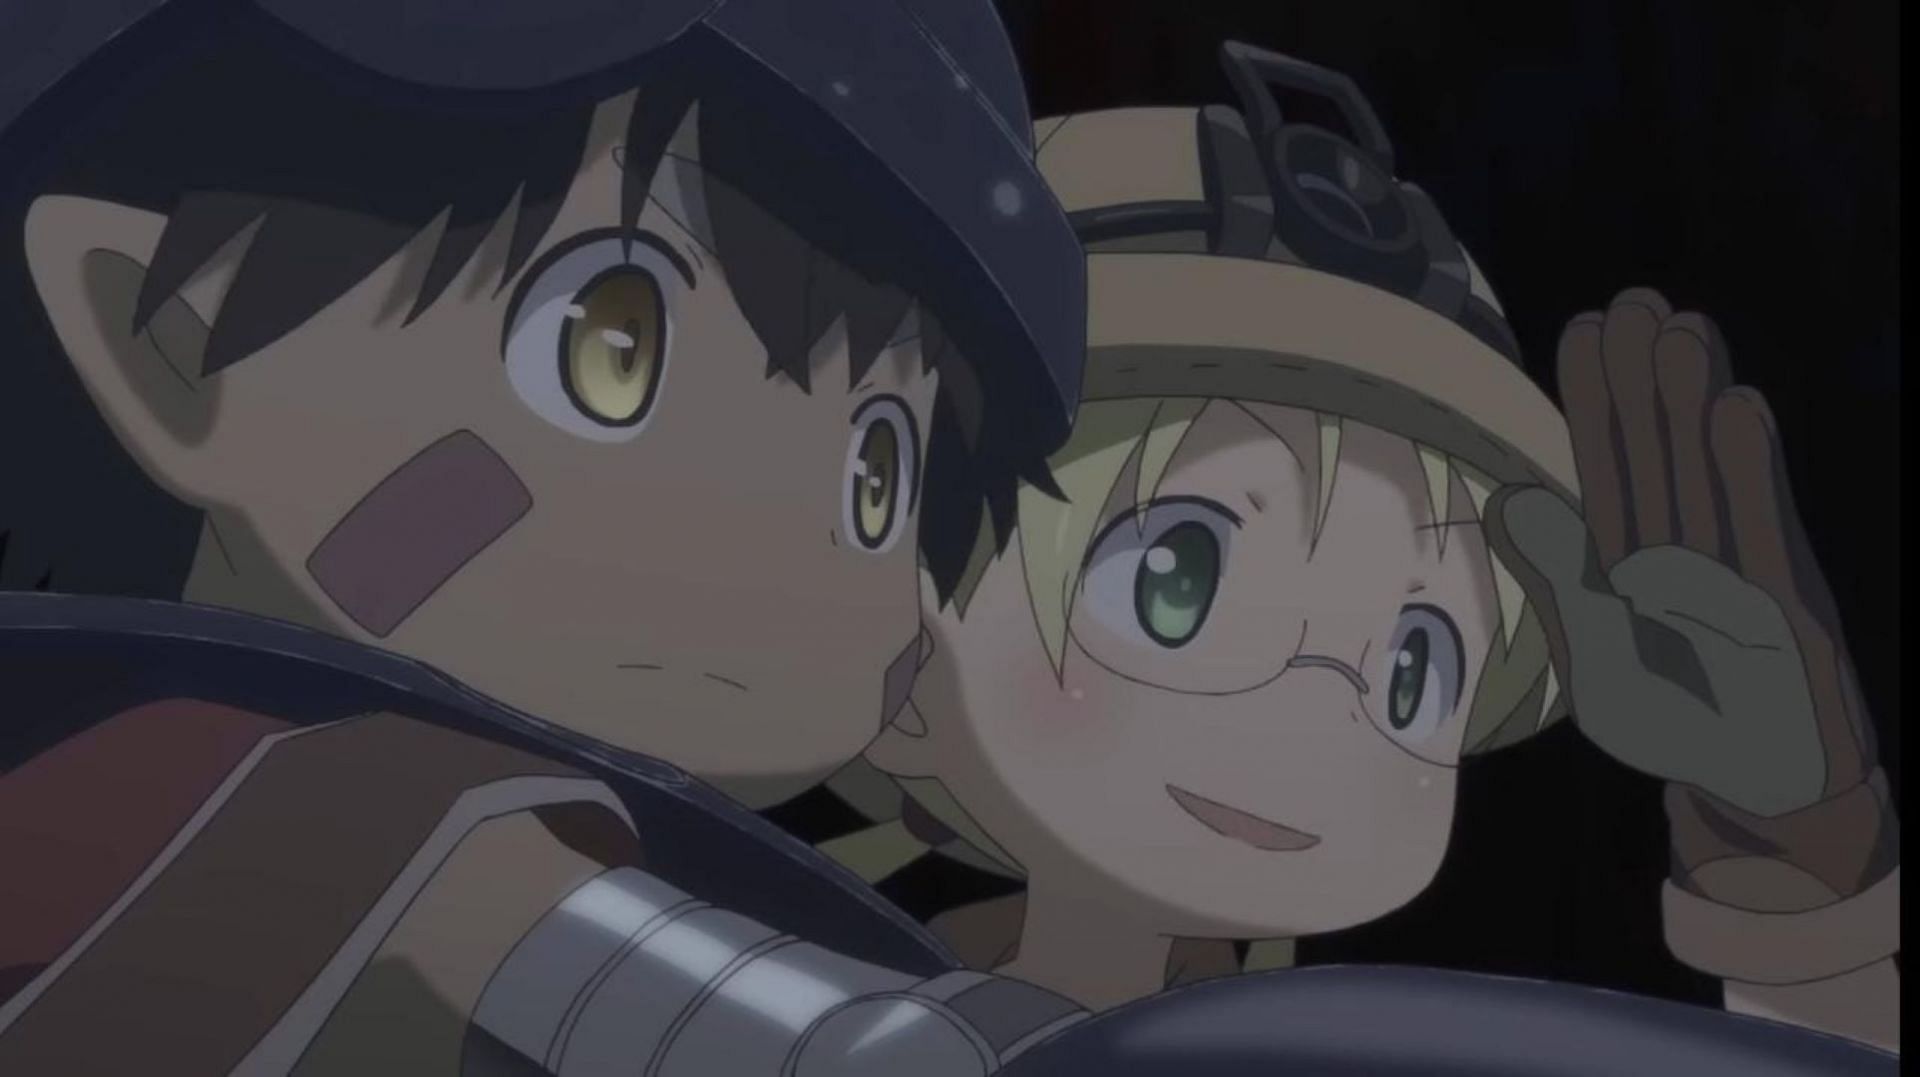 Riko and Reg as seen in the anime (Image via Kinema Citrus)